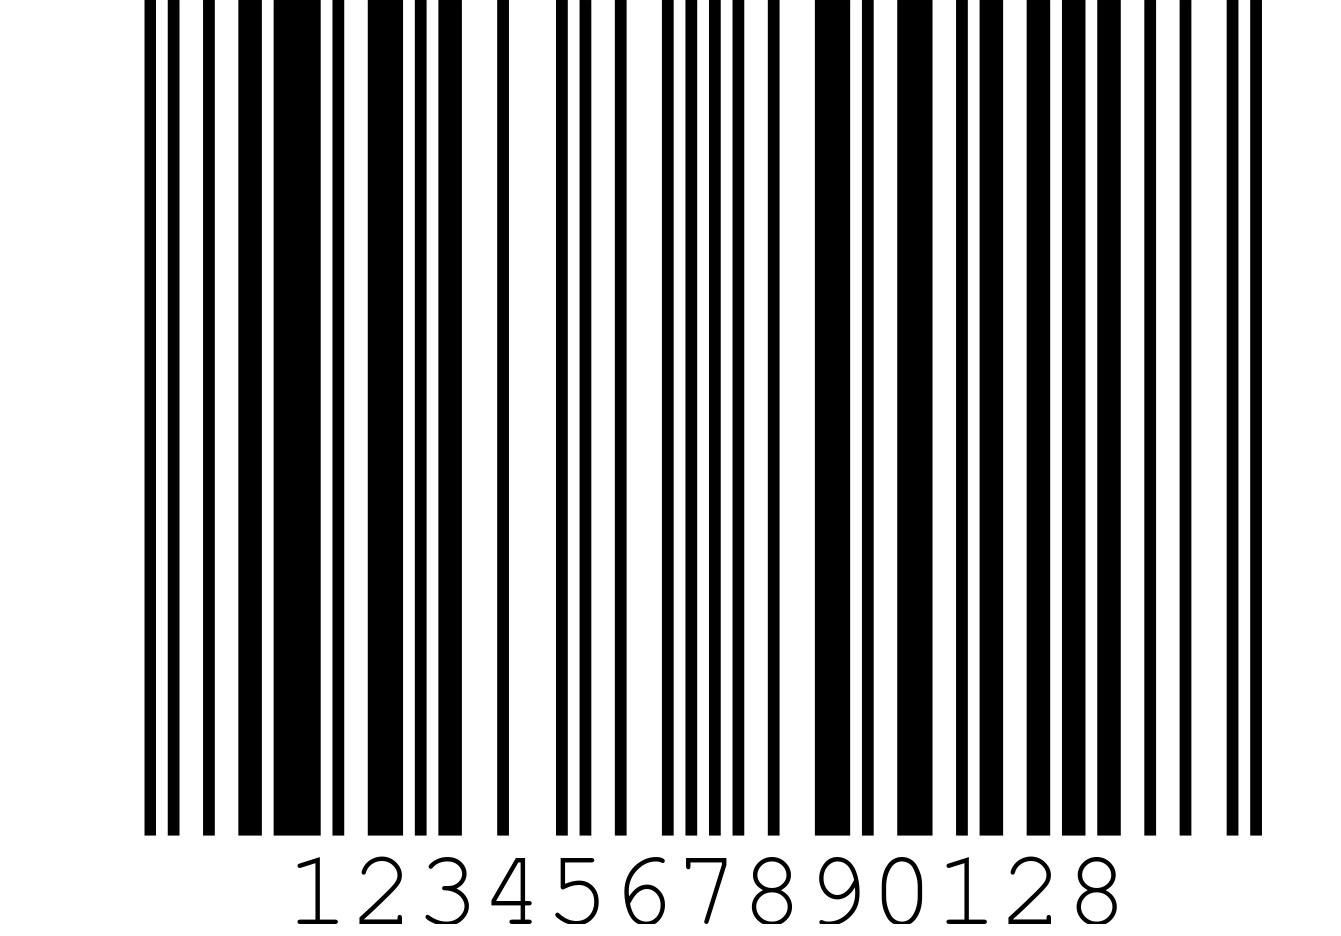 Etiqueta de precio Original / Códigos de Barras / ean-13 2